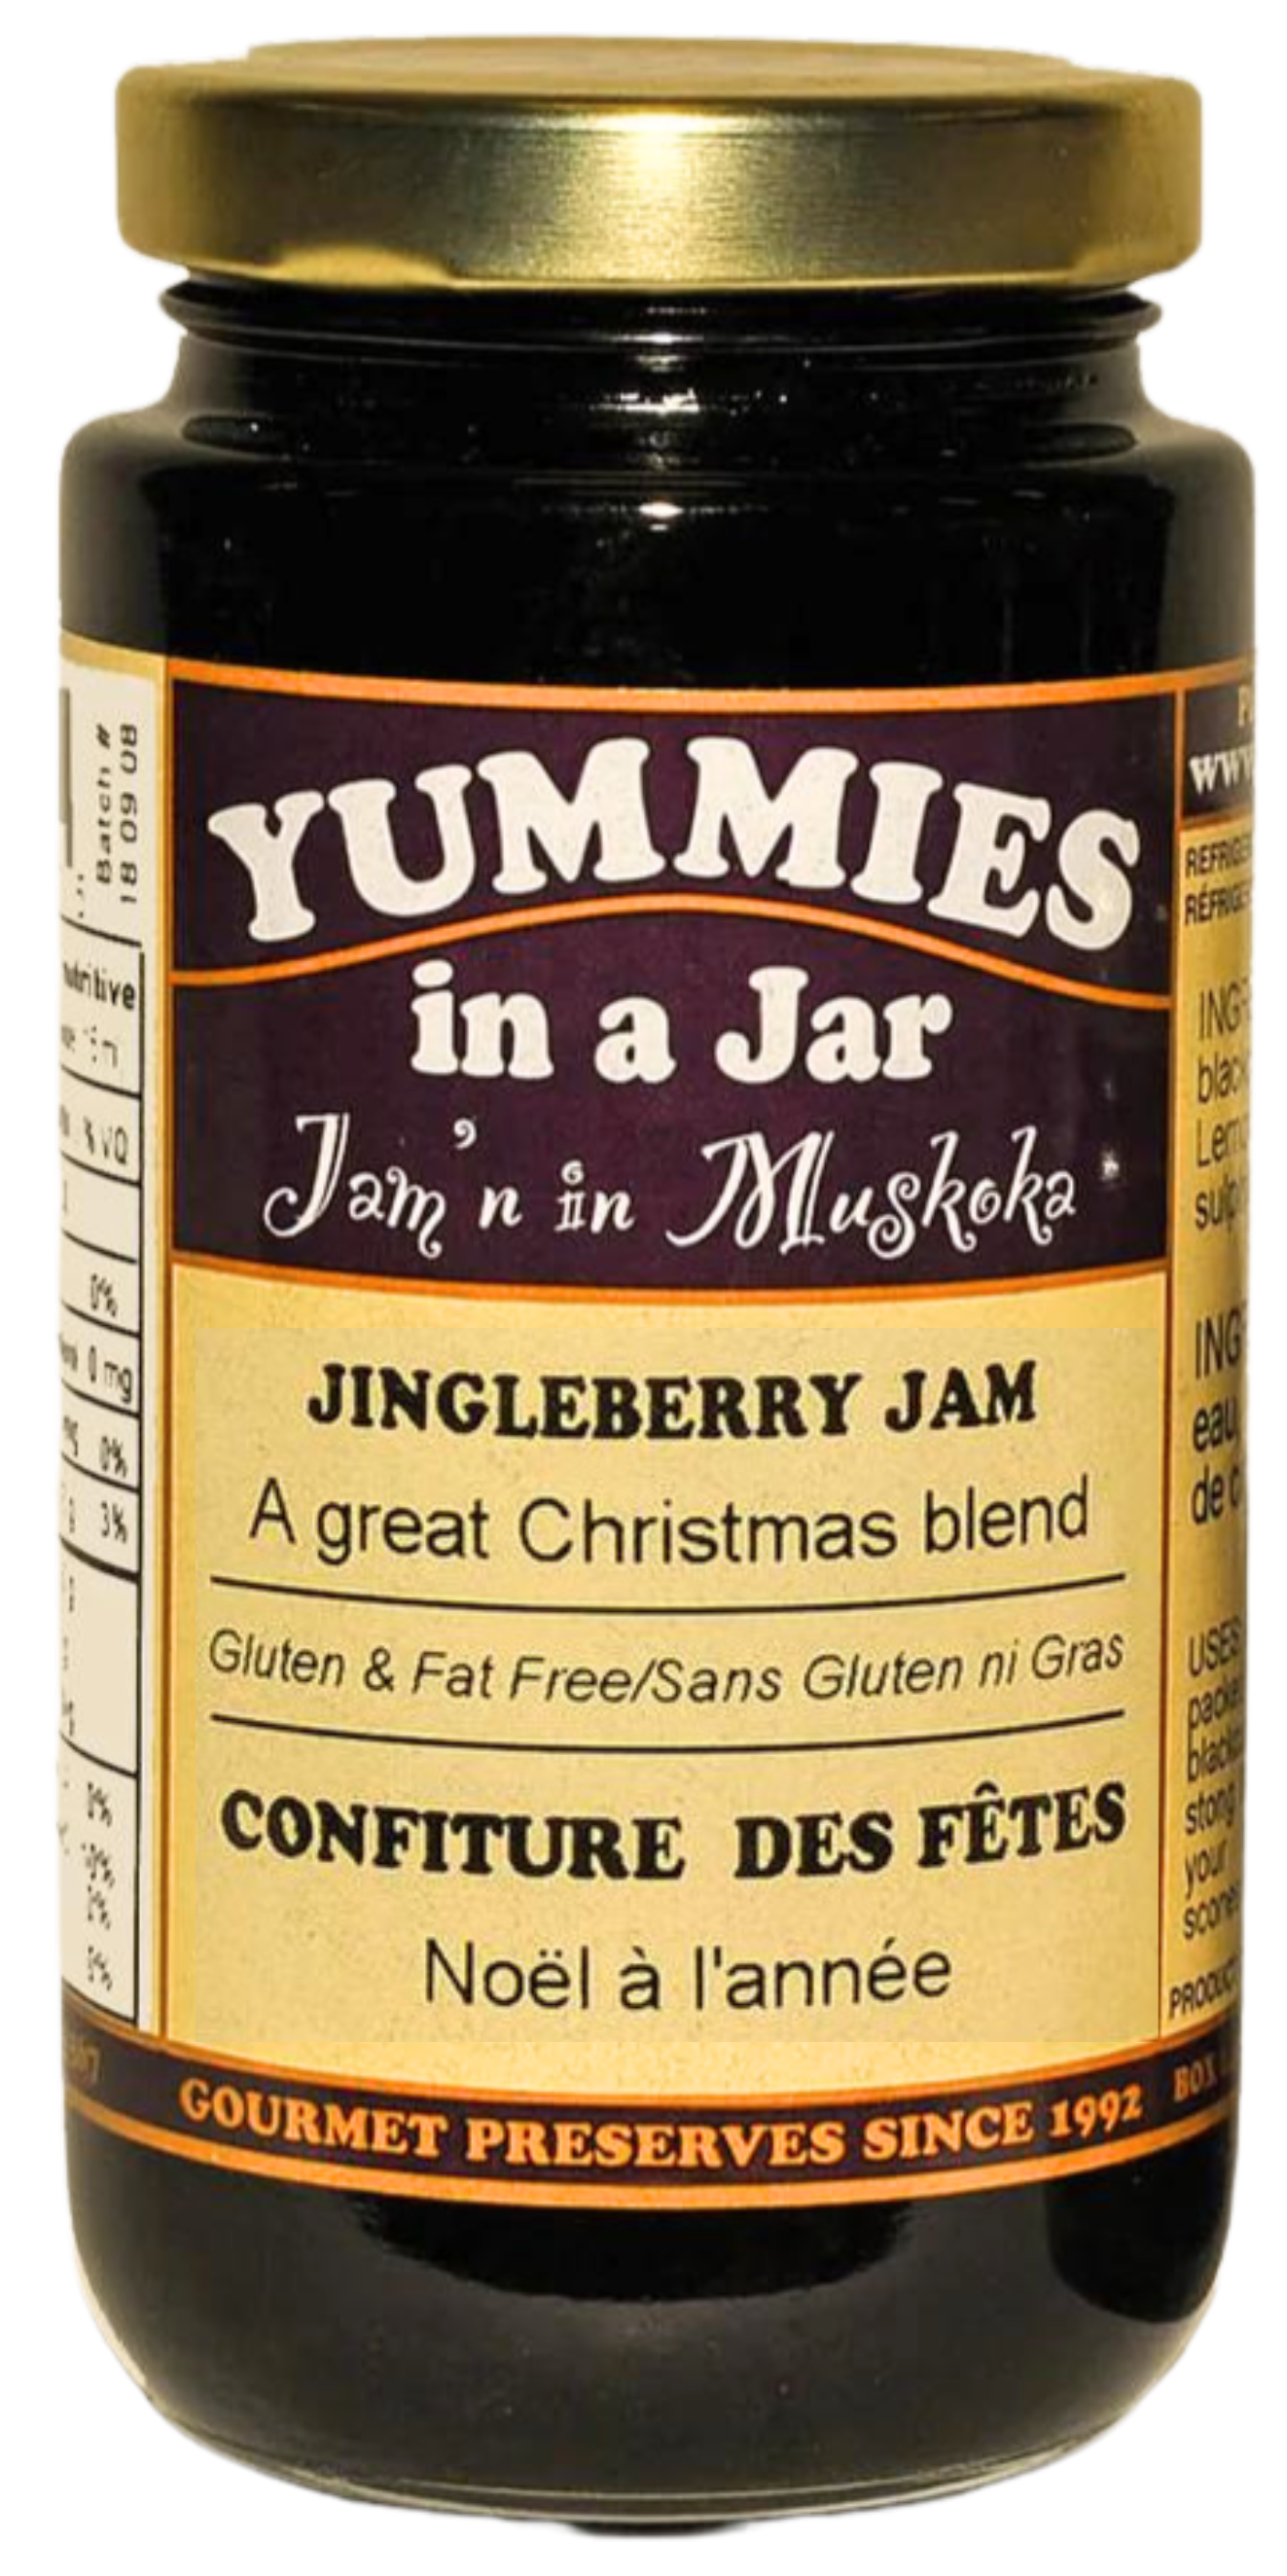 Yummies in a Jar jingleberry jam